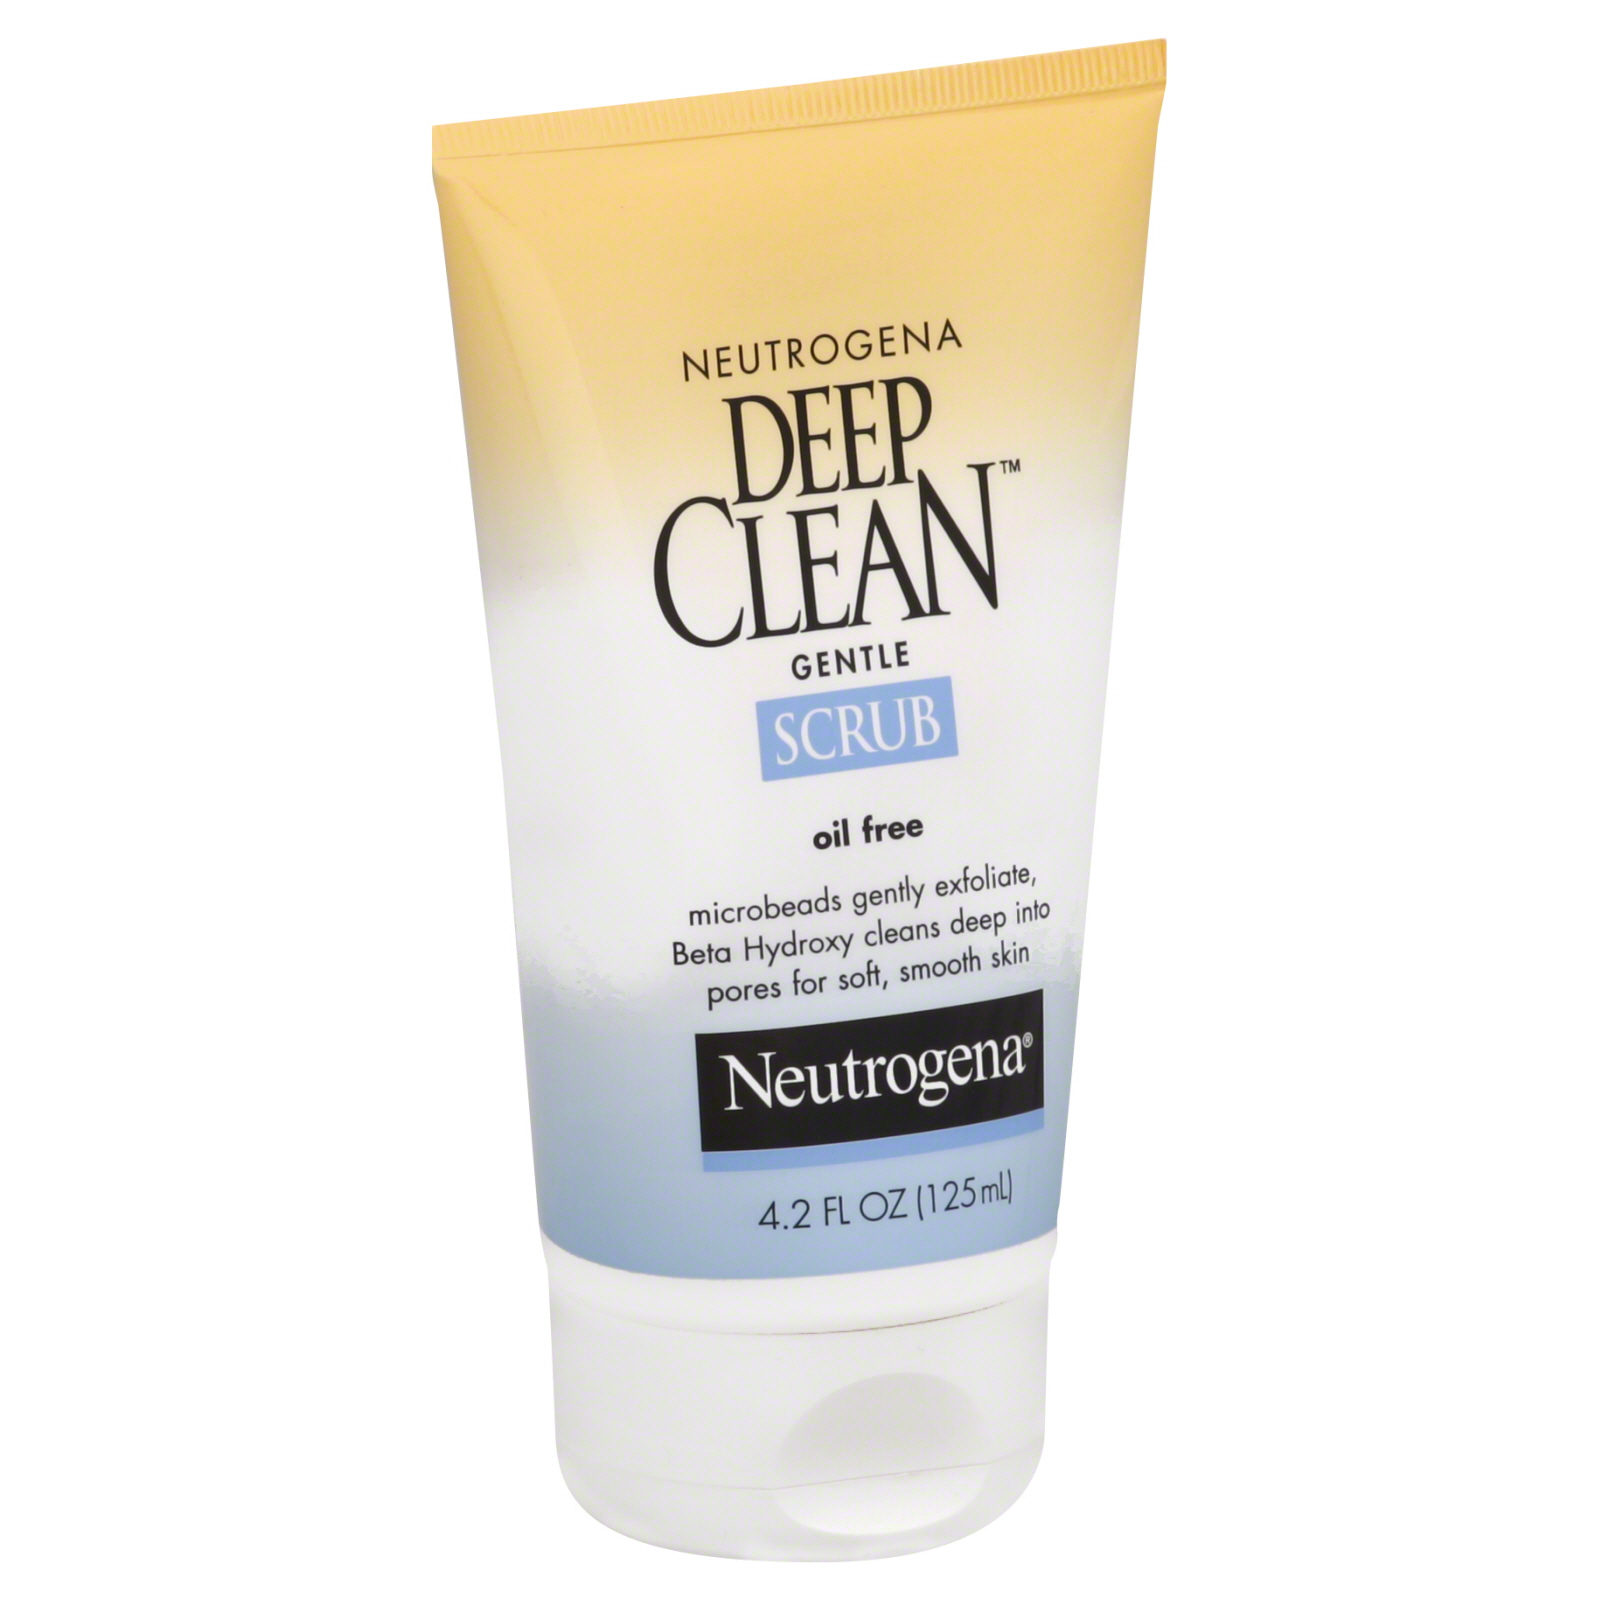 Neutrogena Deep Clean Scrub, Gentle, Oil Free, 4.2 fl oz (125 ml)